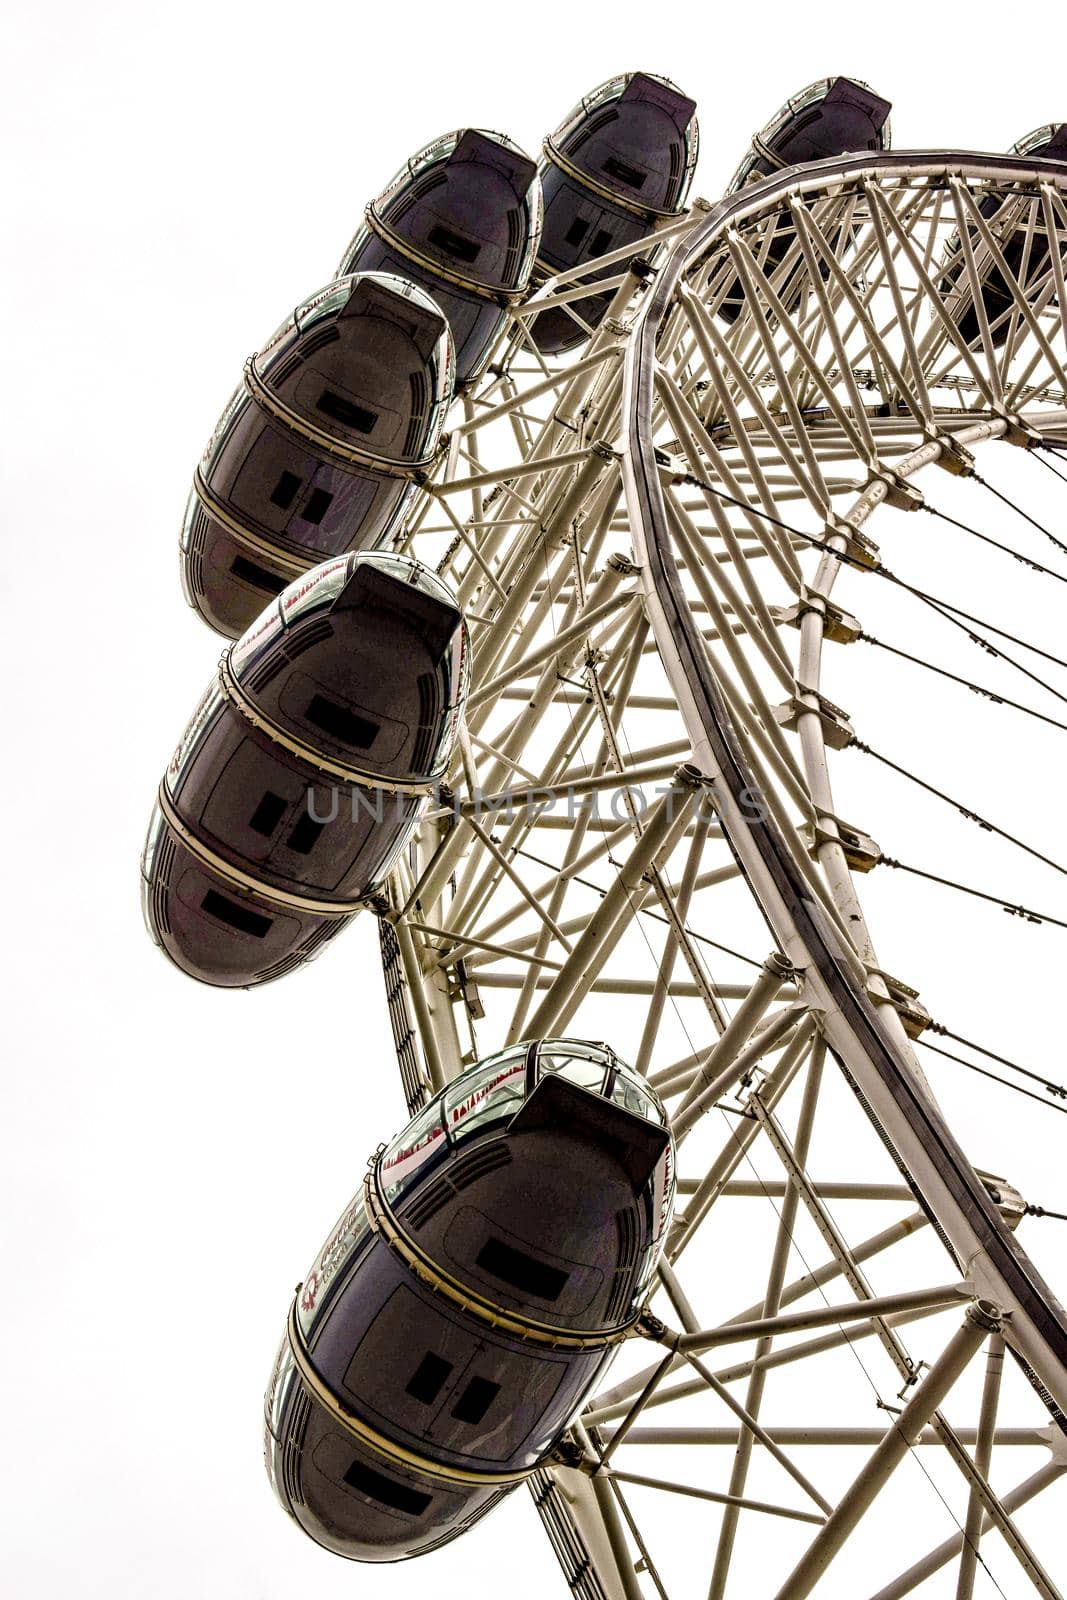 London eye millennium wheel London Landmark attraction deatil by Skrobanek